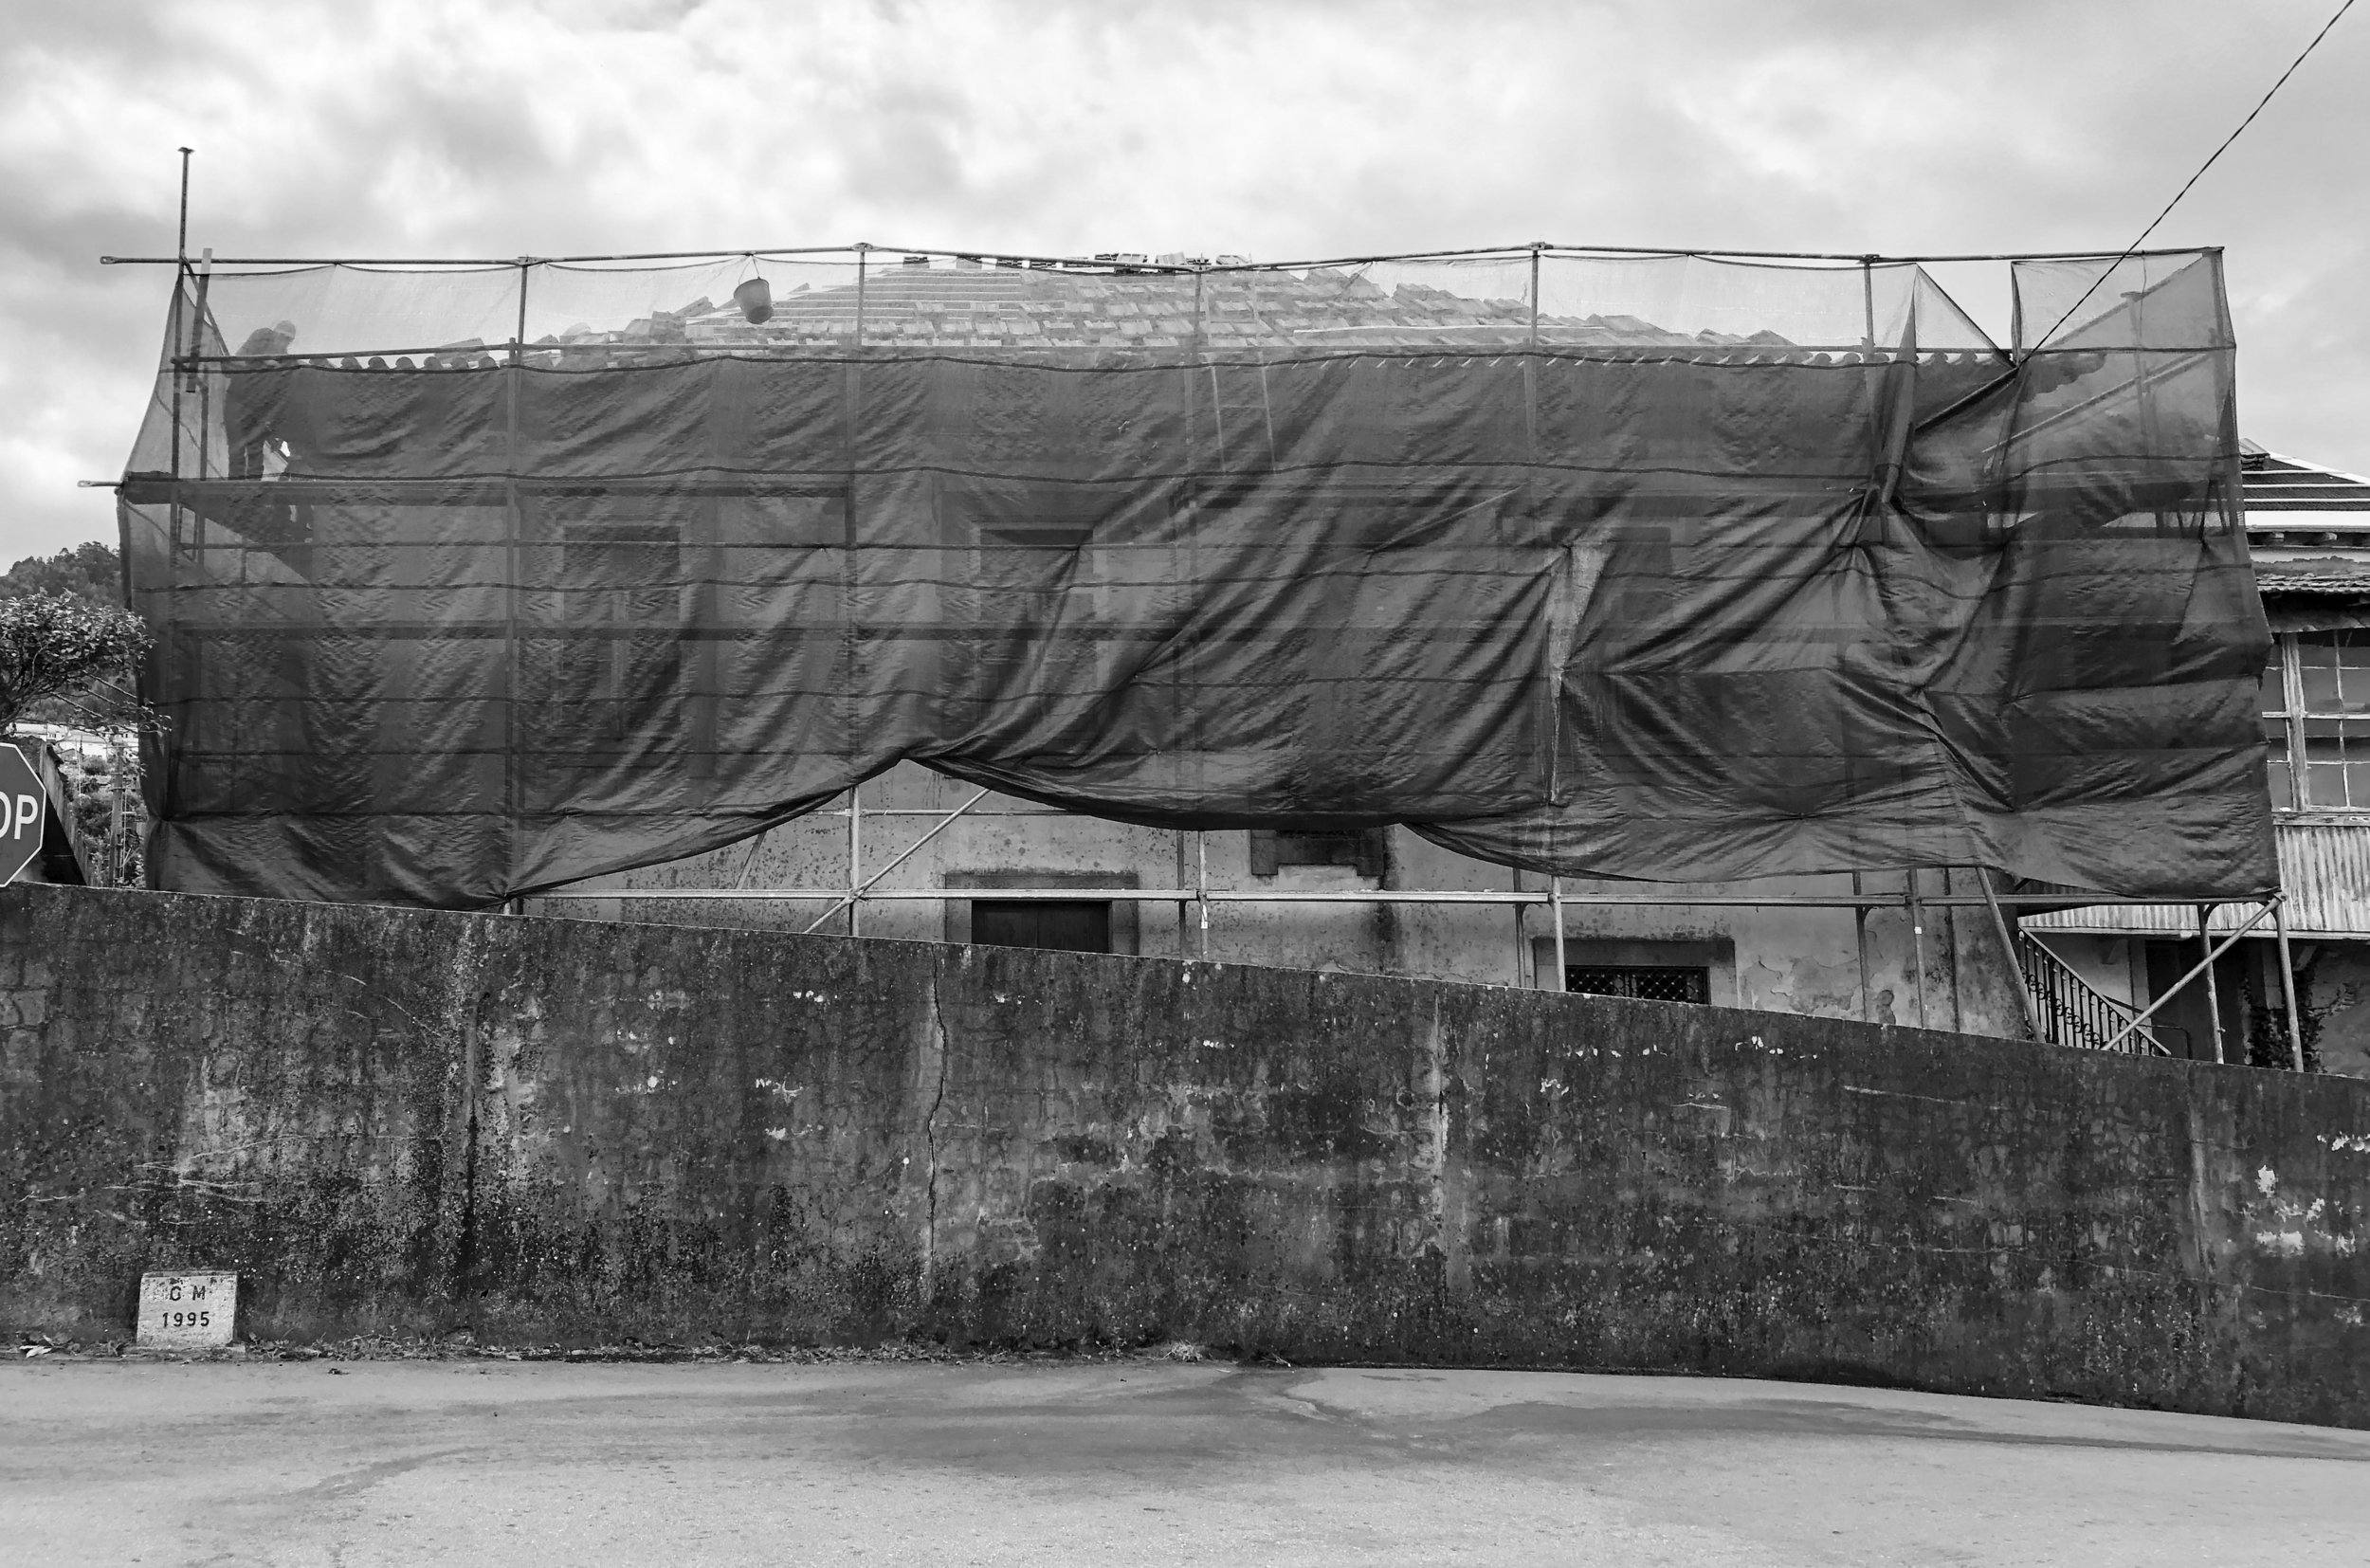 Casa de Burgães - EVA atelier - Vale de Cambra - restauro - património - projecto - arquitectura (13).jpg